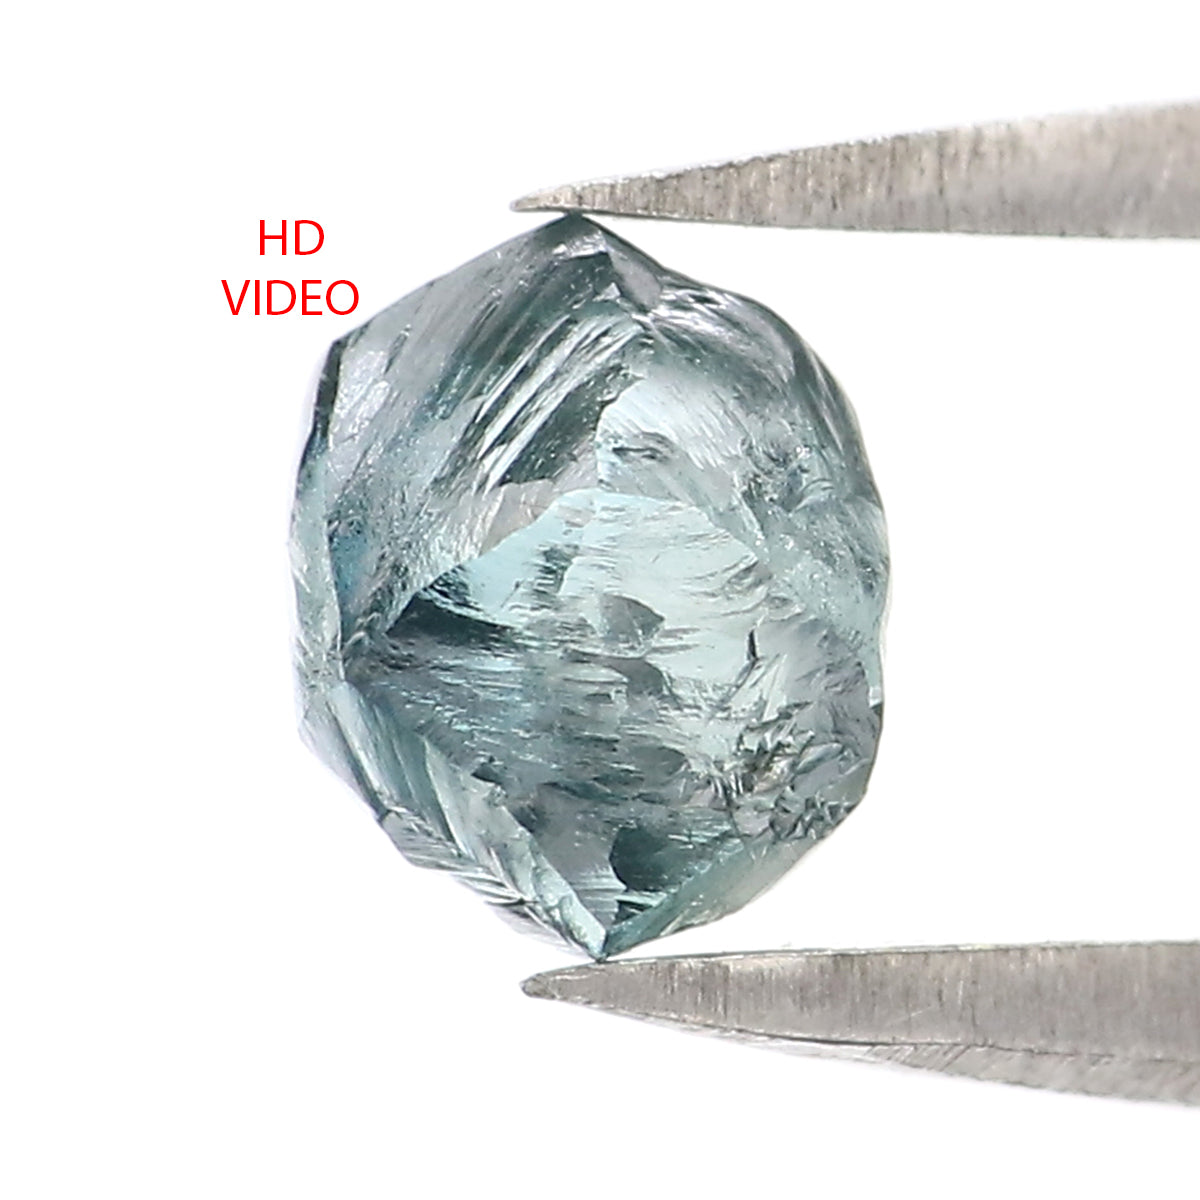 0.97 CT Natural Loose Rough Shape Diamond Blue Color Rough Cut Diamond 5.65 MM Natural Loose Blue Diamond Rough Irregular Cut Diamond QL2347